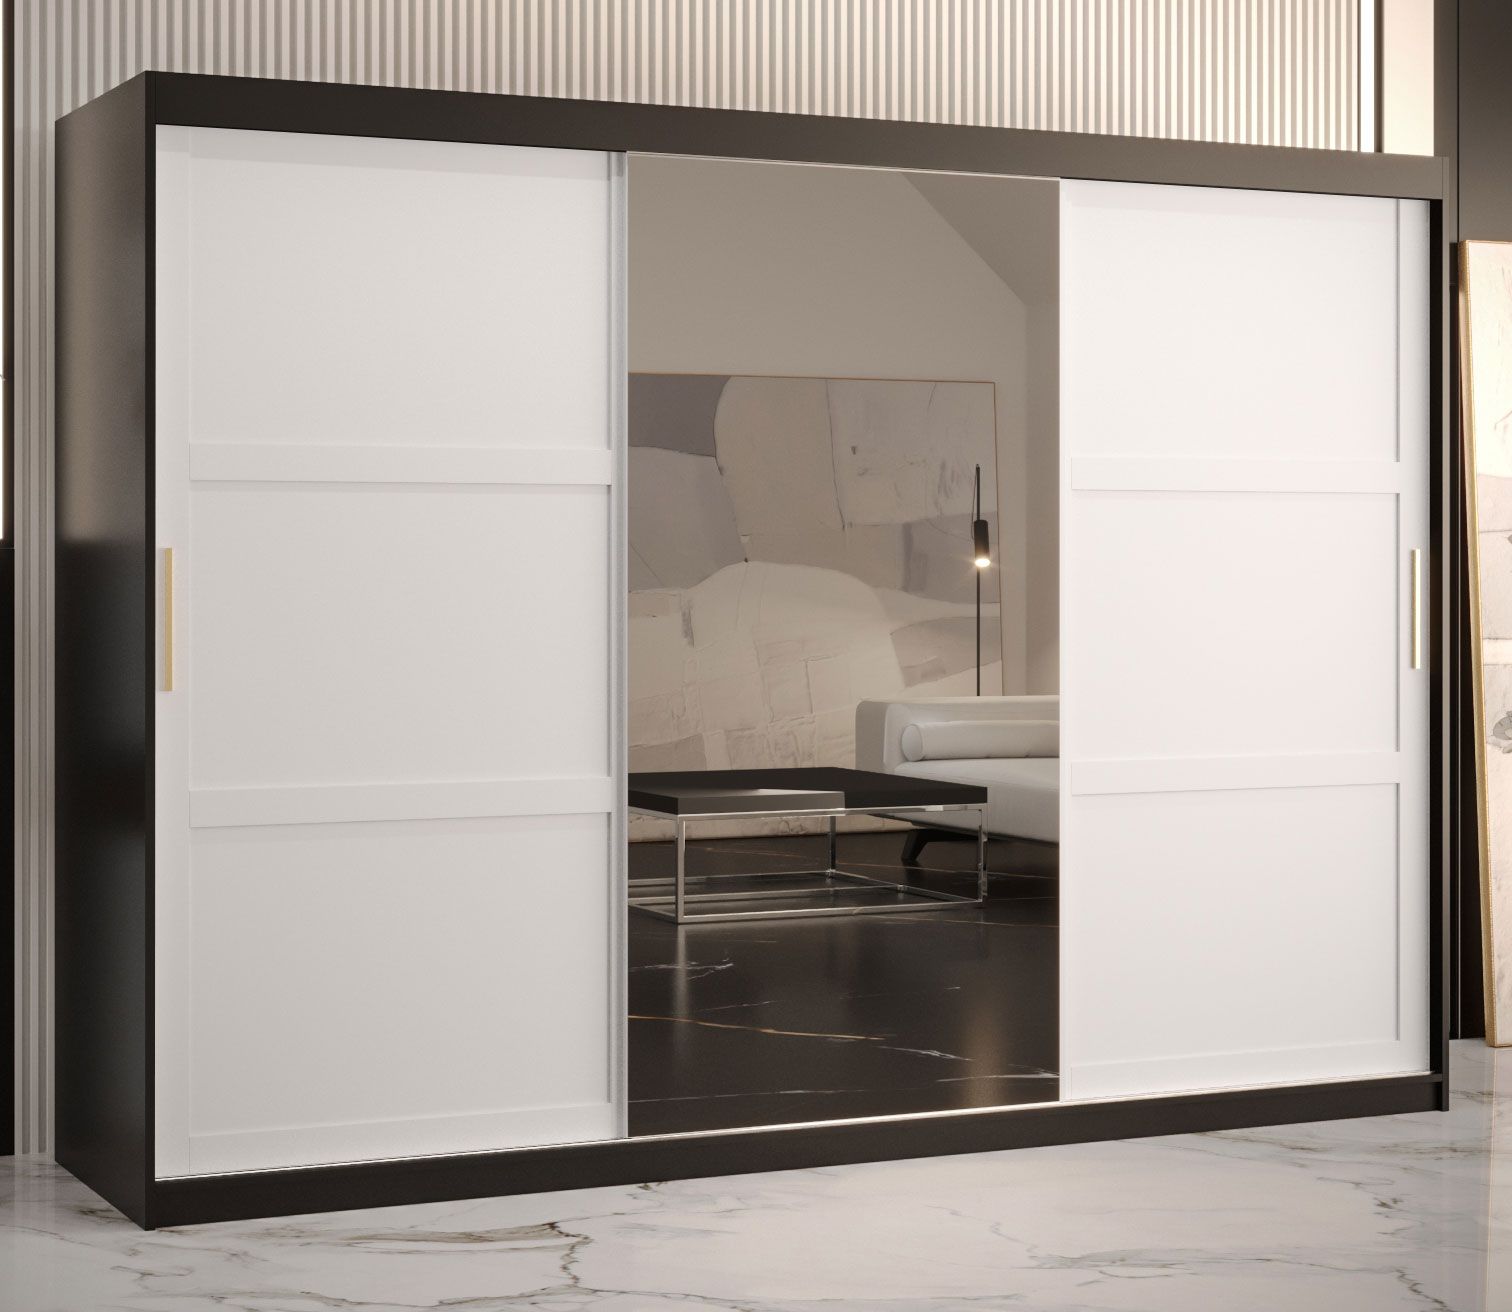 Kledingkast met één deur met spiegel Liskamm 47, kleur: mat zwart / mat wit - afmetingen: 200 x 250 x 62 cm (H x B x D), met voldoende opbergruimte